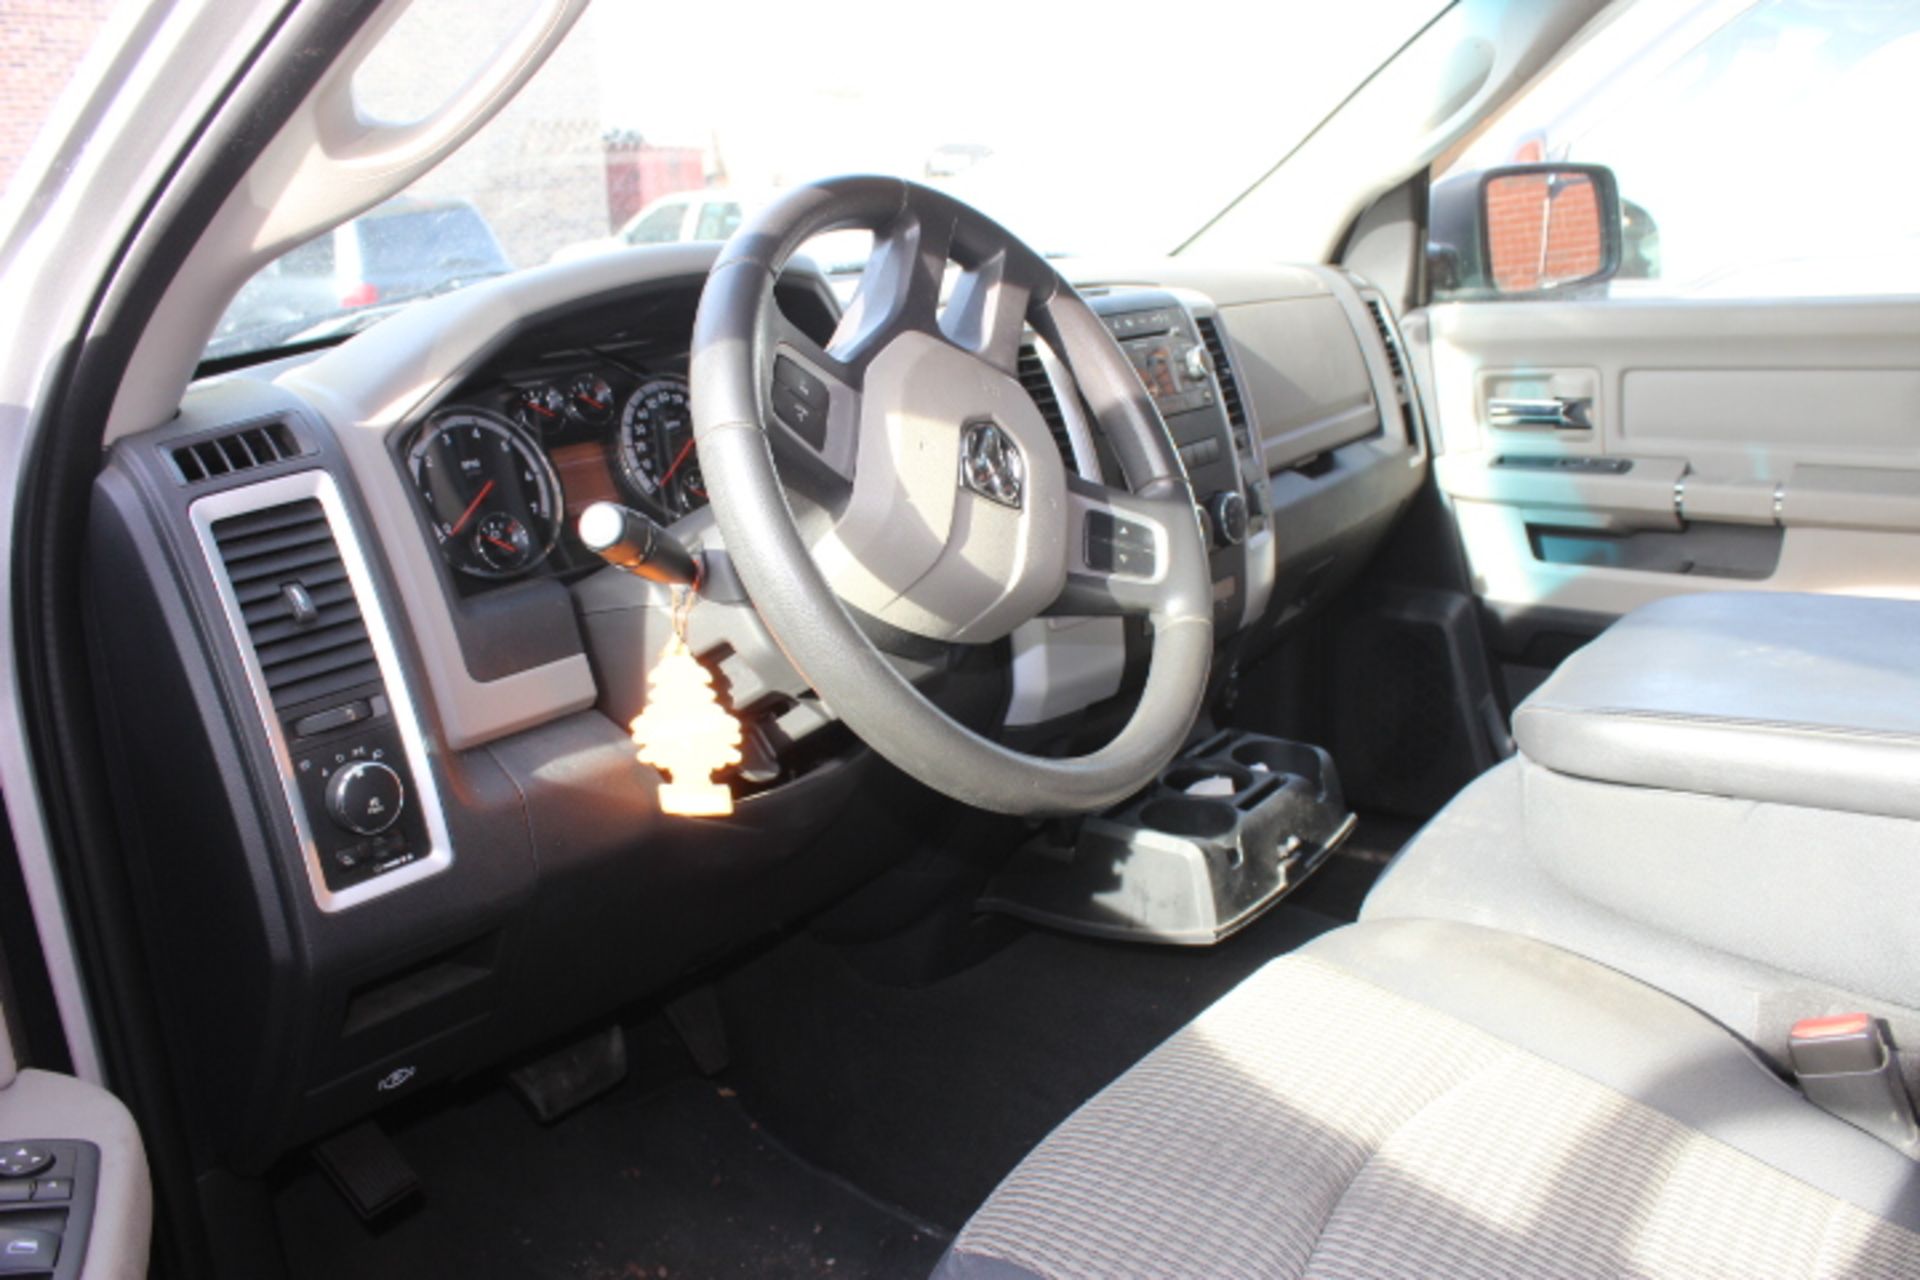 2009 DODGE  SLT QUAD CAB 4WD, 5.7L-HEMI,  VIN 1D3HV18T99S762213, 101,521 Miles - Image 4 of 5